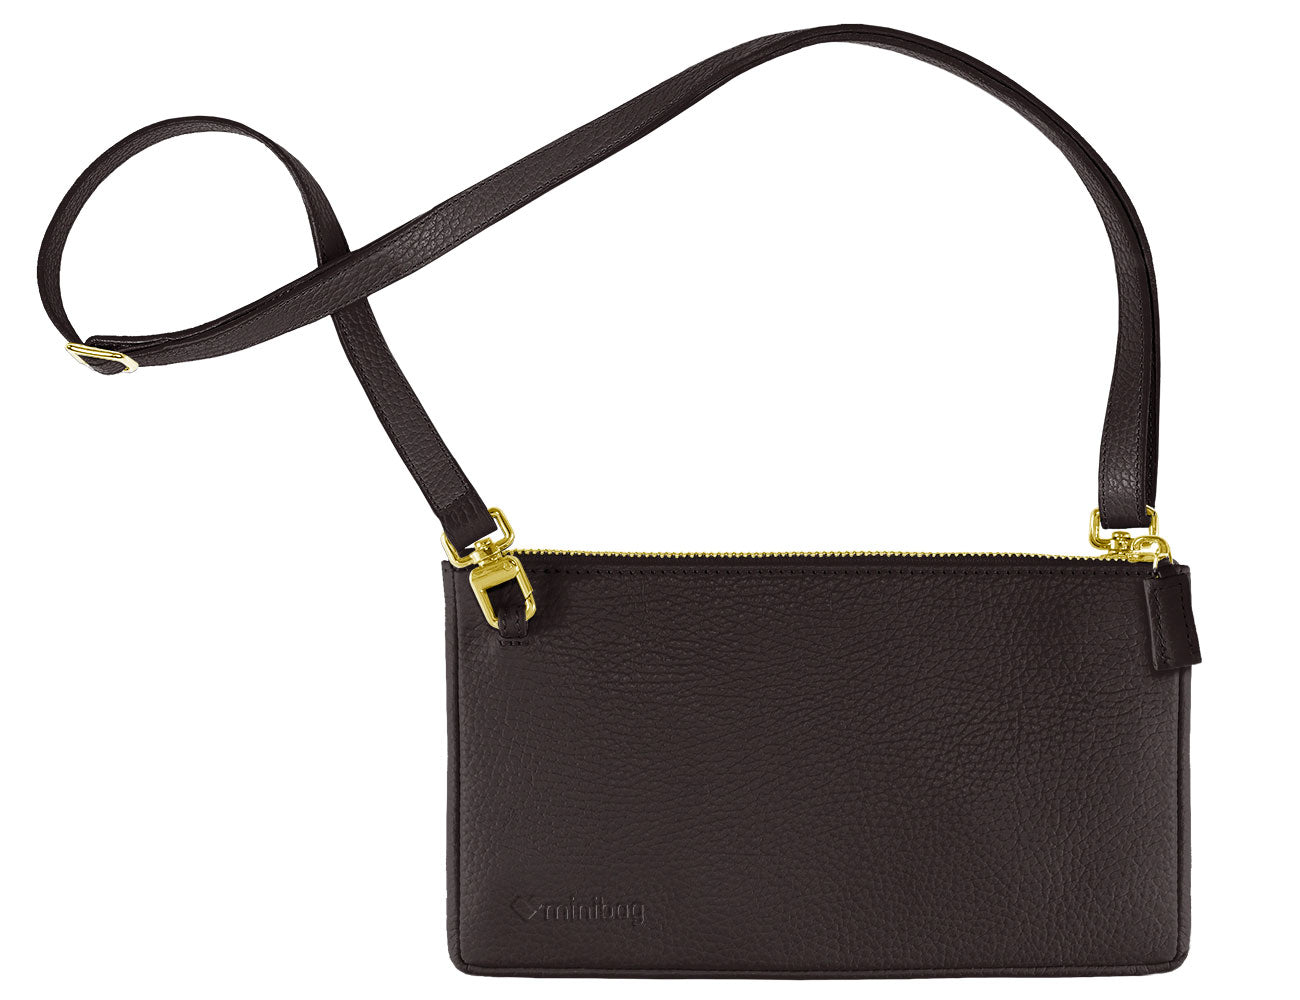 minibag chocolate Edition GOLD, dunkelbraune Ledertasche, goldene Details, Geldtasche zum Umhängen